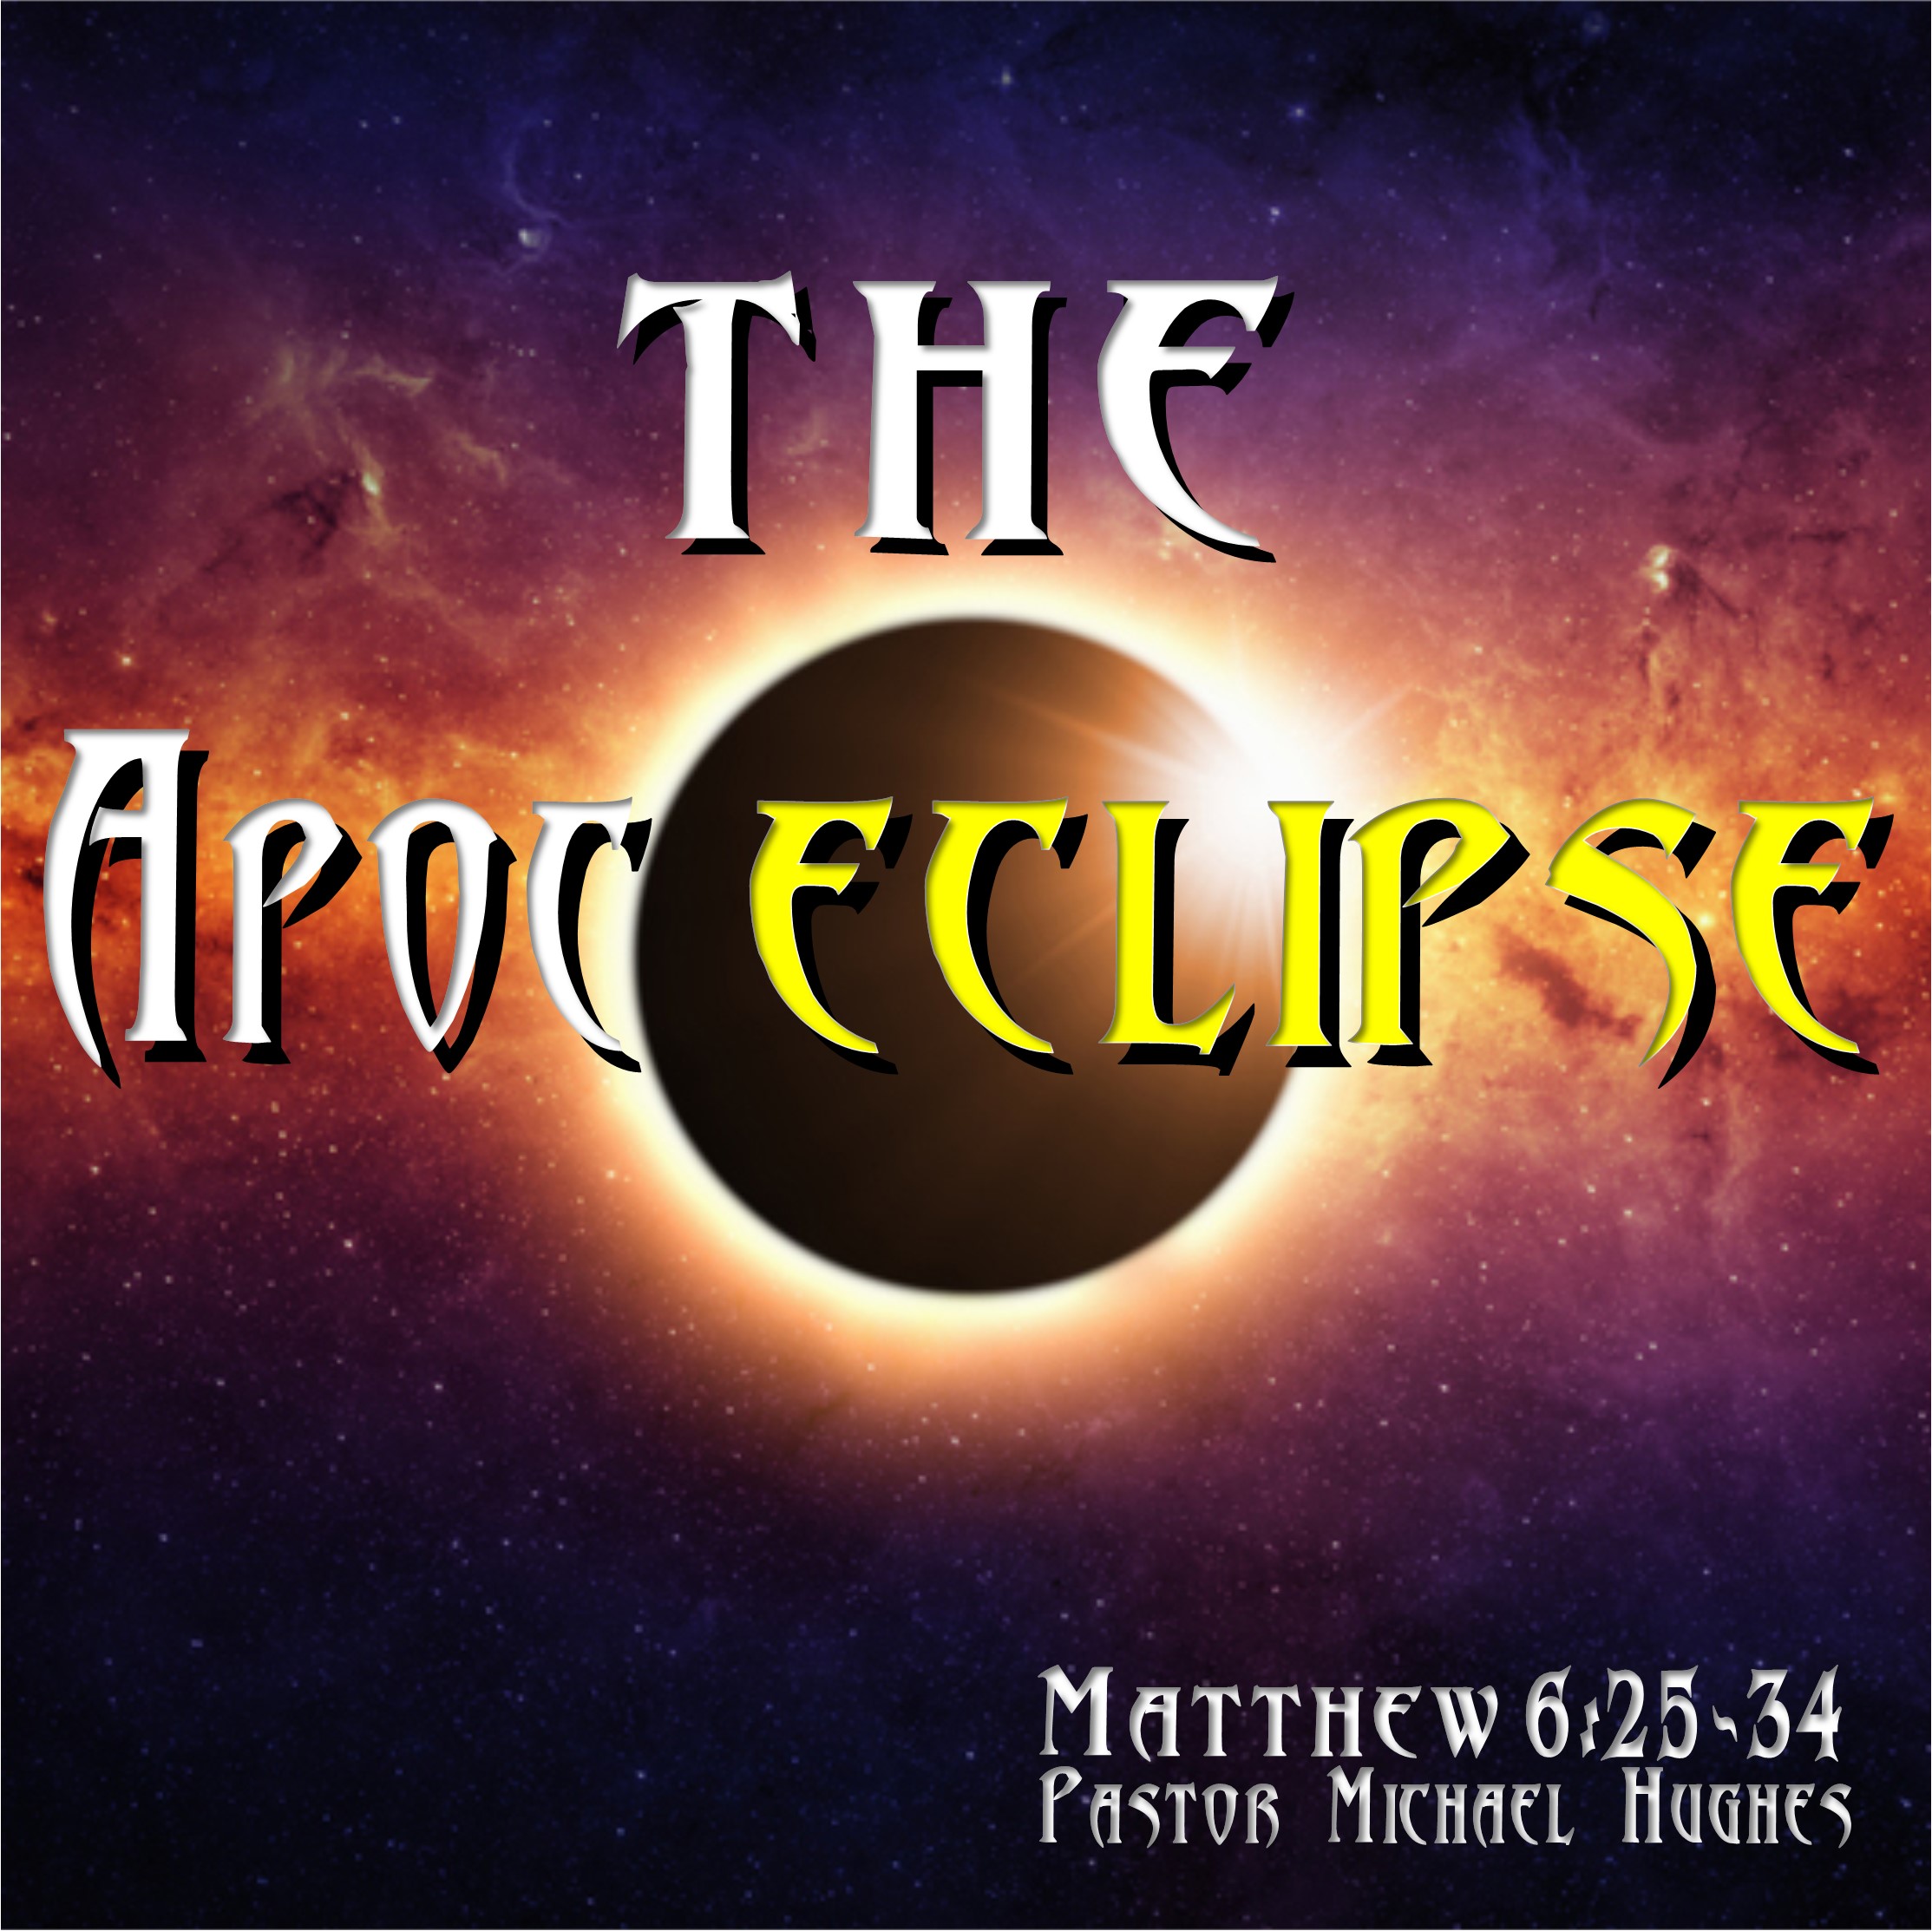 Matthew 6:25-34 ”Apoceclipse” w/ Pastor Michael Hughes